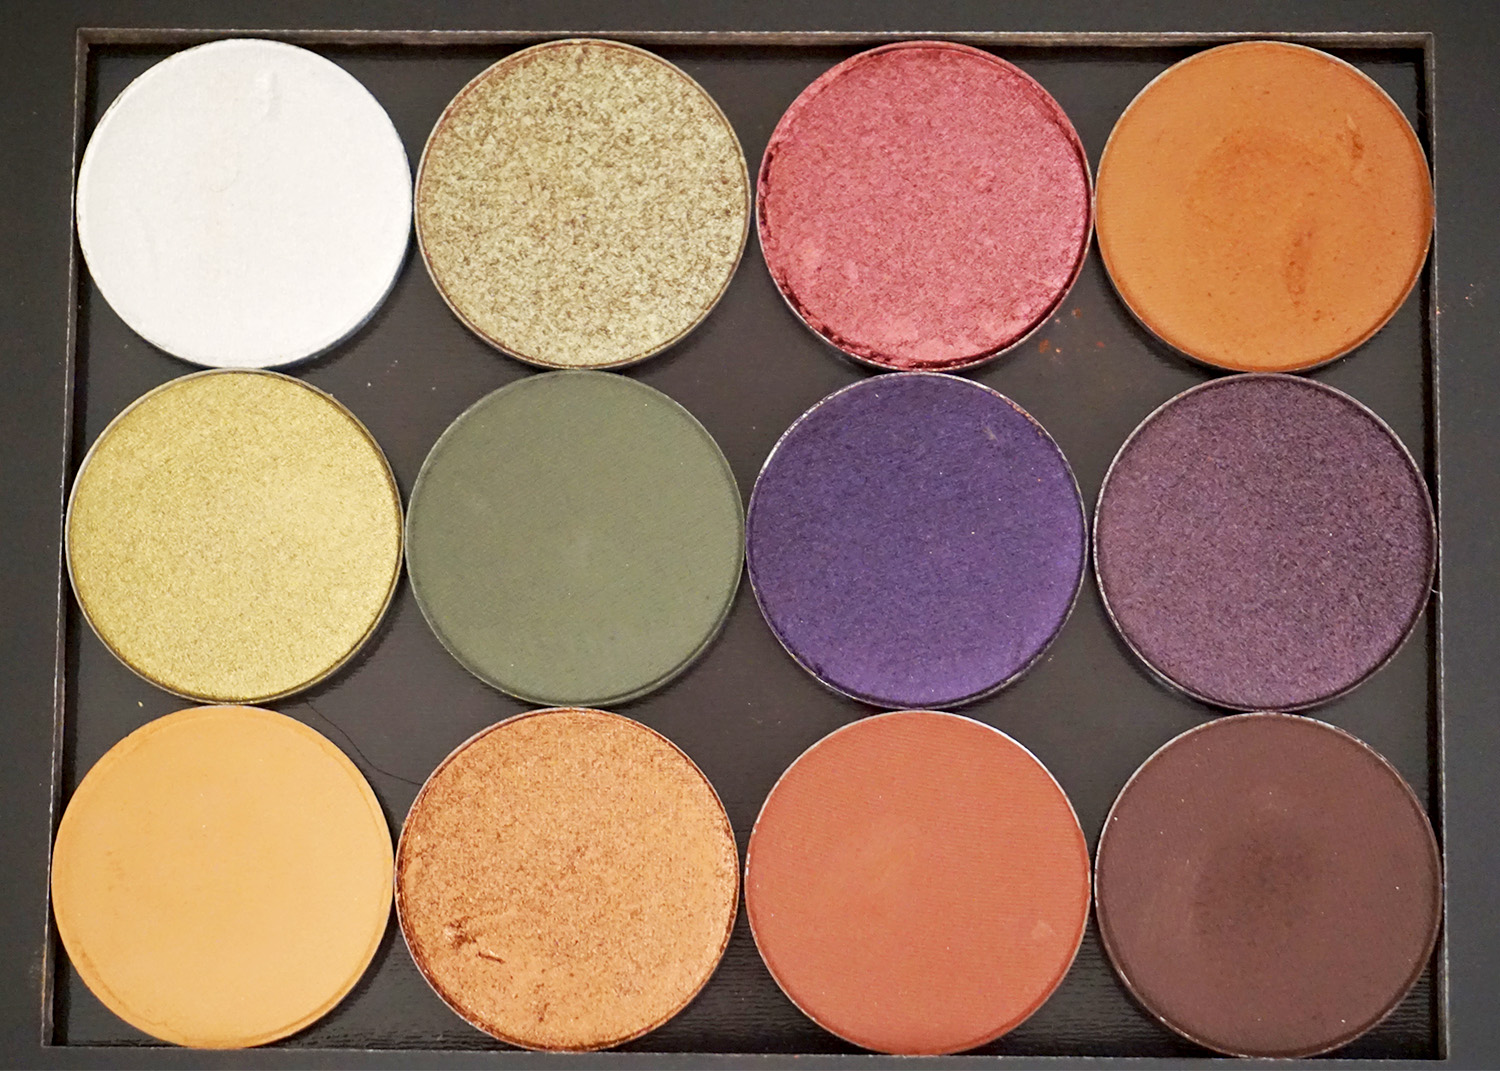 ColourPop Pressed Powder Eyeshadows | bellanoirbeauty.com